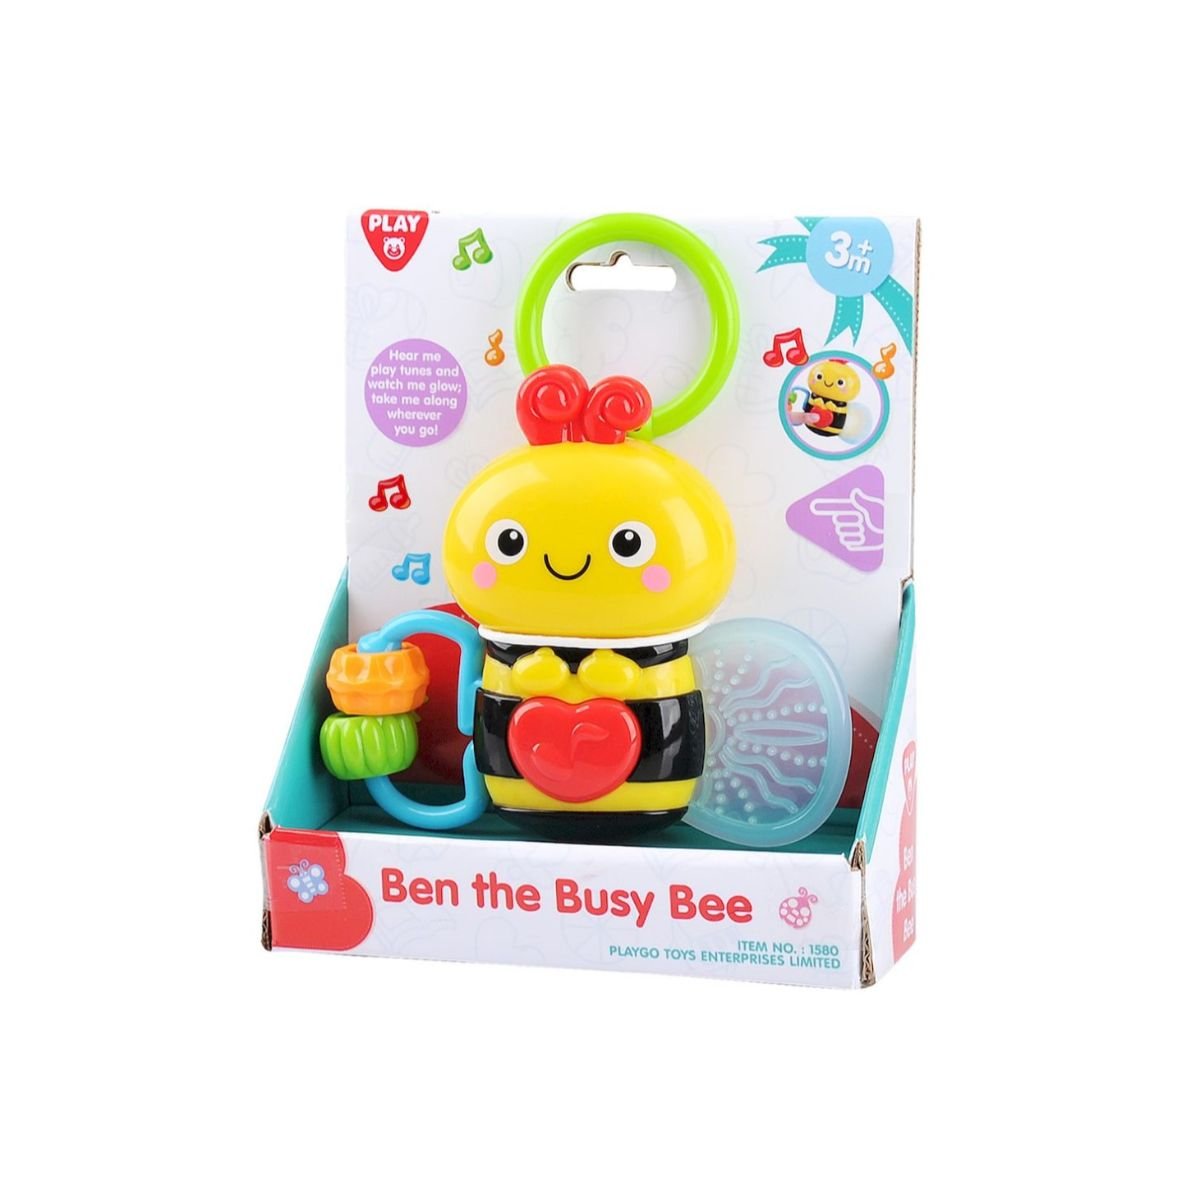 Play Go Ben the Busy Bee - 323791